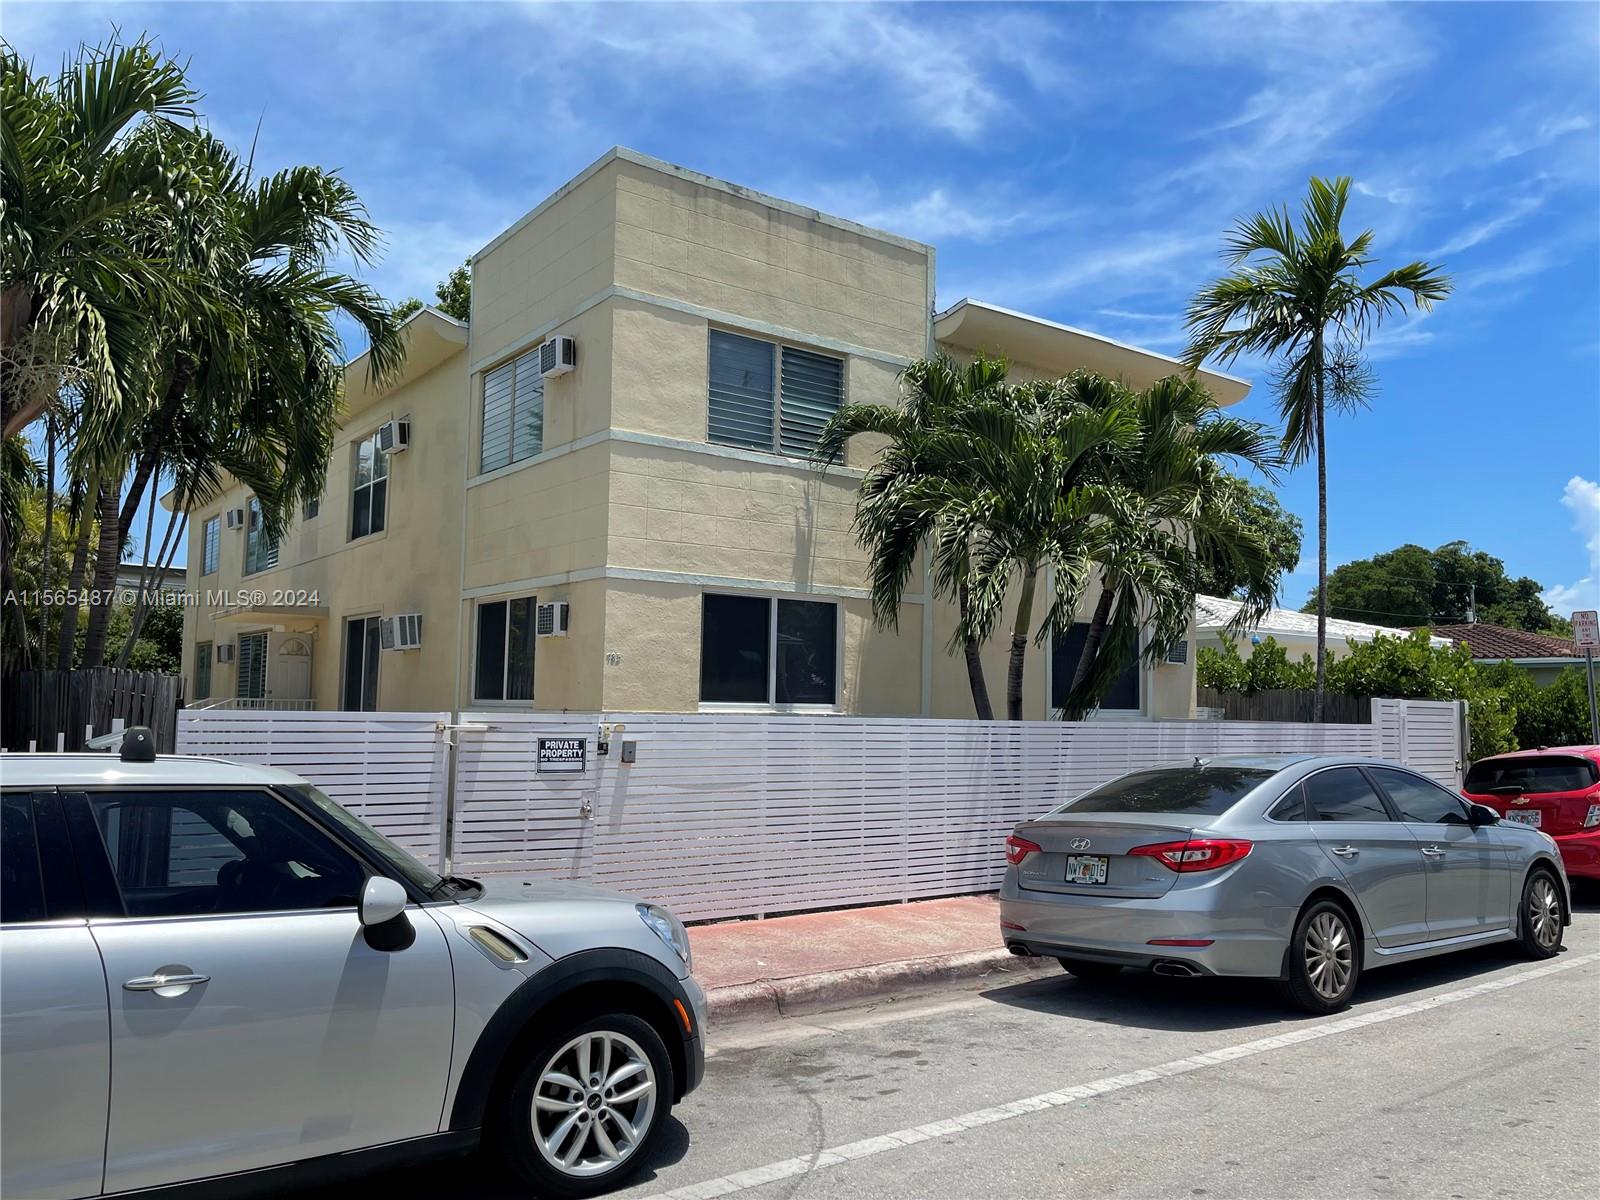 Rental Property at 785 81st St 3, Miami Beach, Miami-Dade County, Florida - Bedrooms: 3 
Bathrooms: 2  - $3,050 MO.